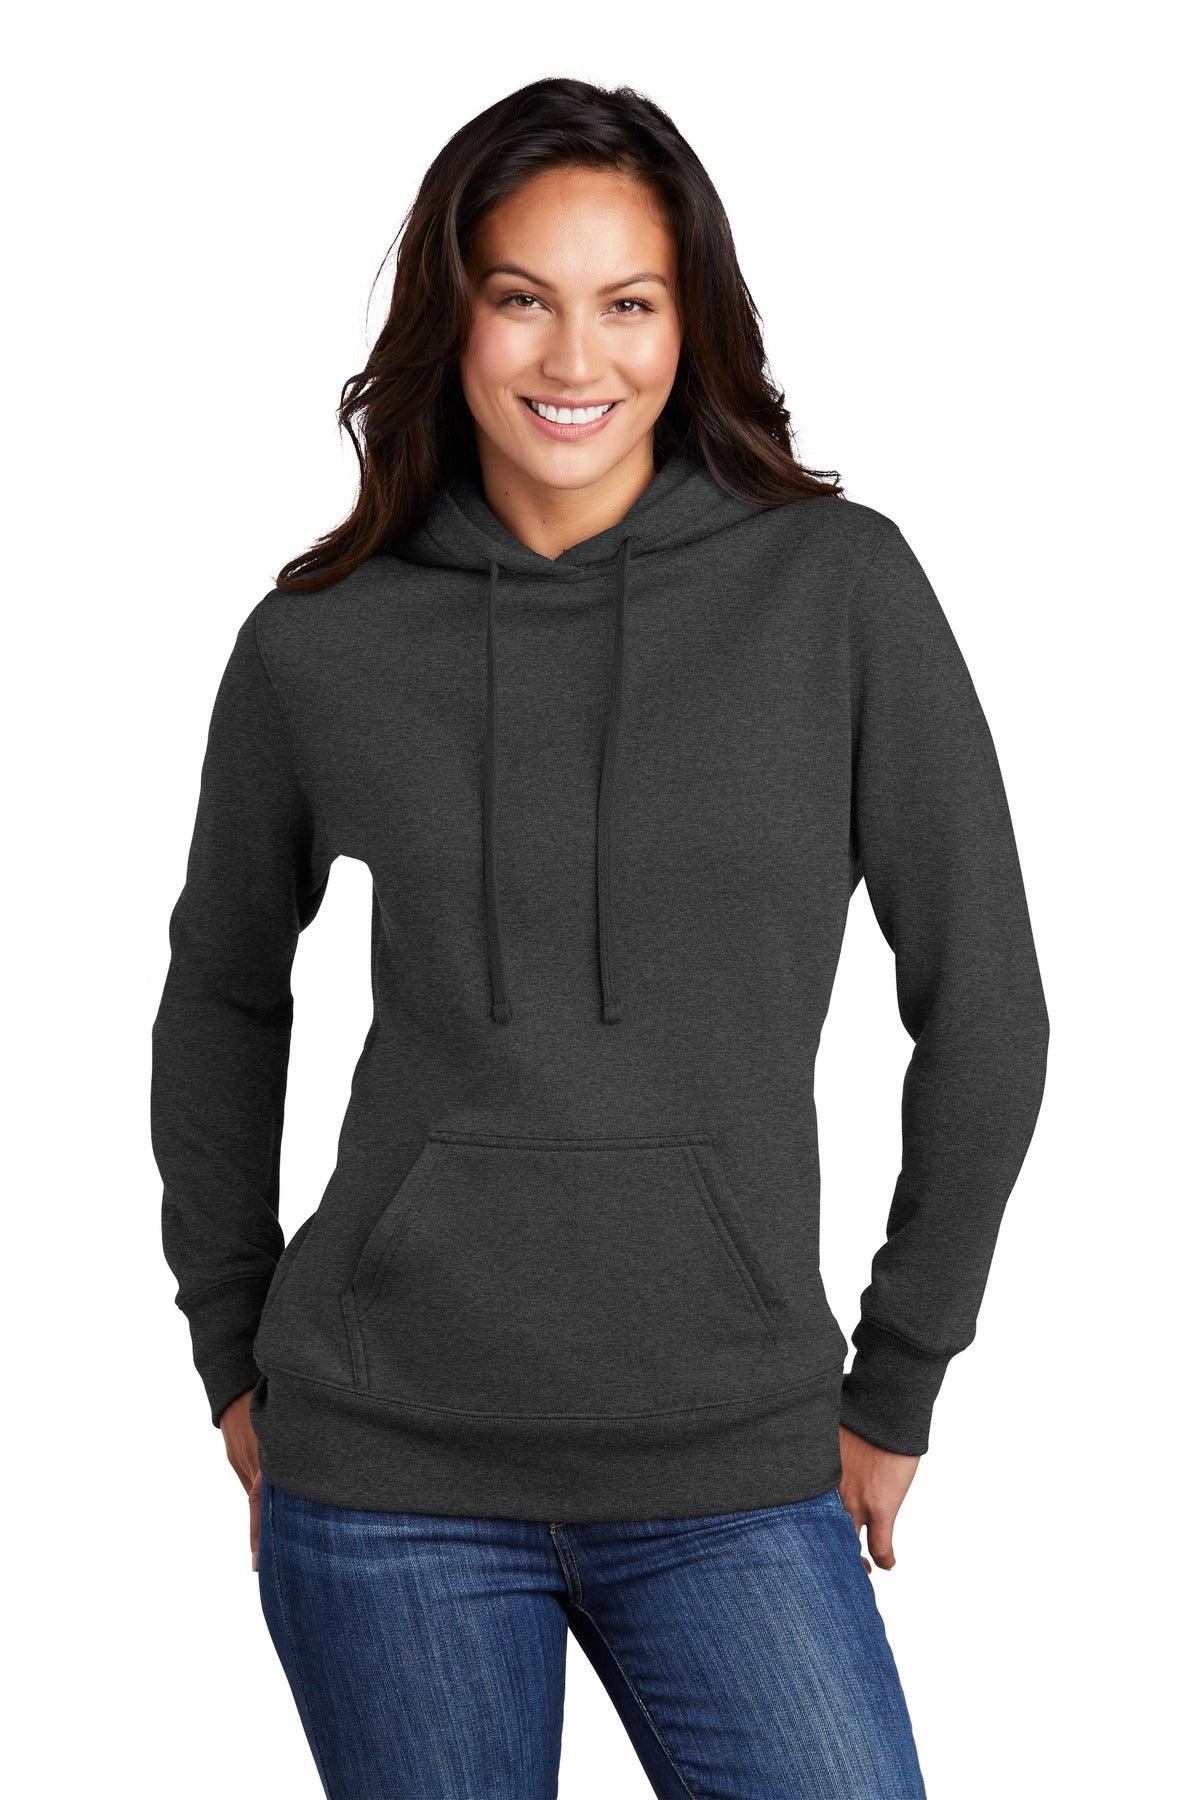 Port & Company Ladies Core Fleece Pullover Hooded Sweatshirt LPC78H - Dresses Max